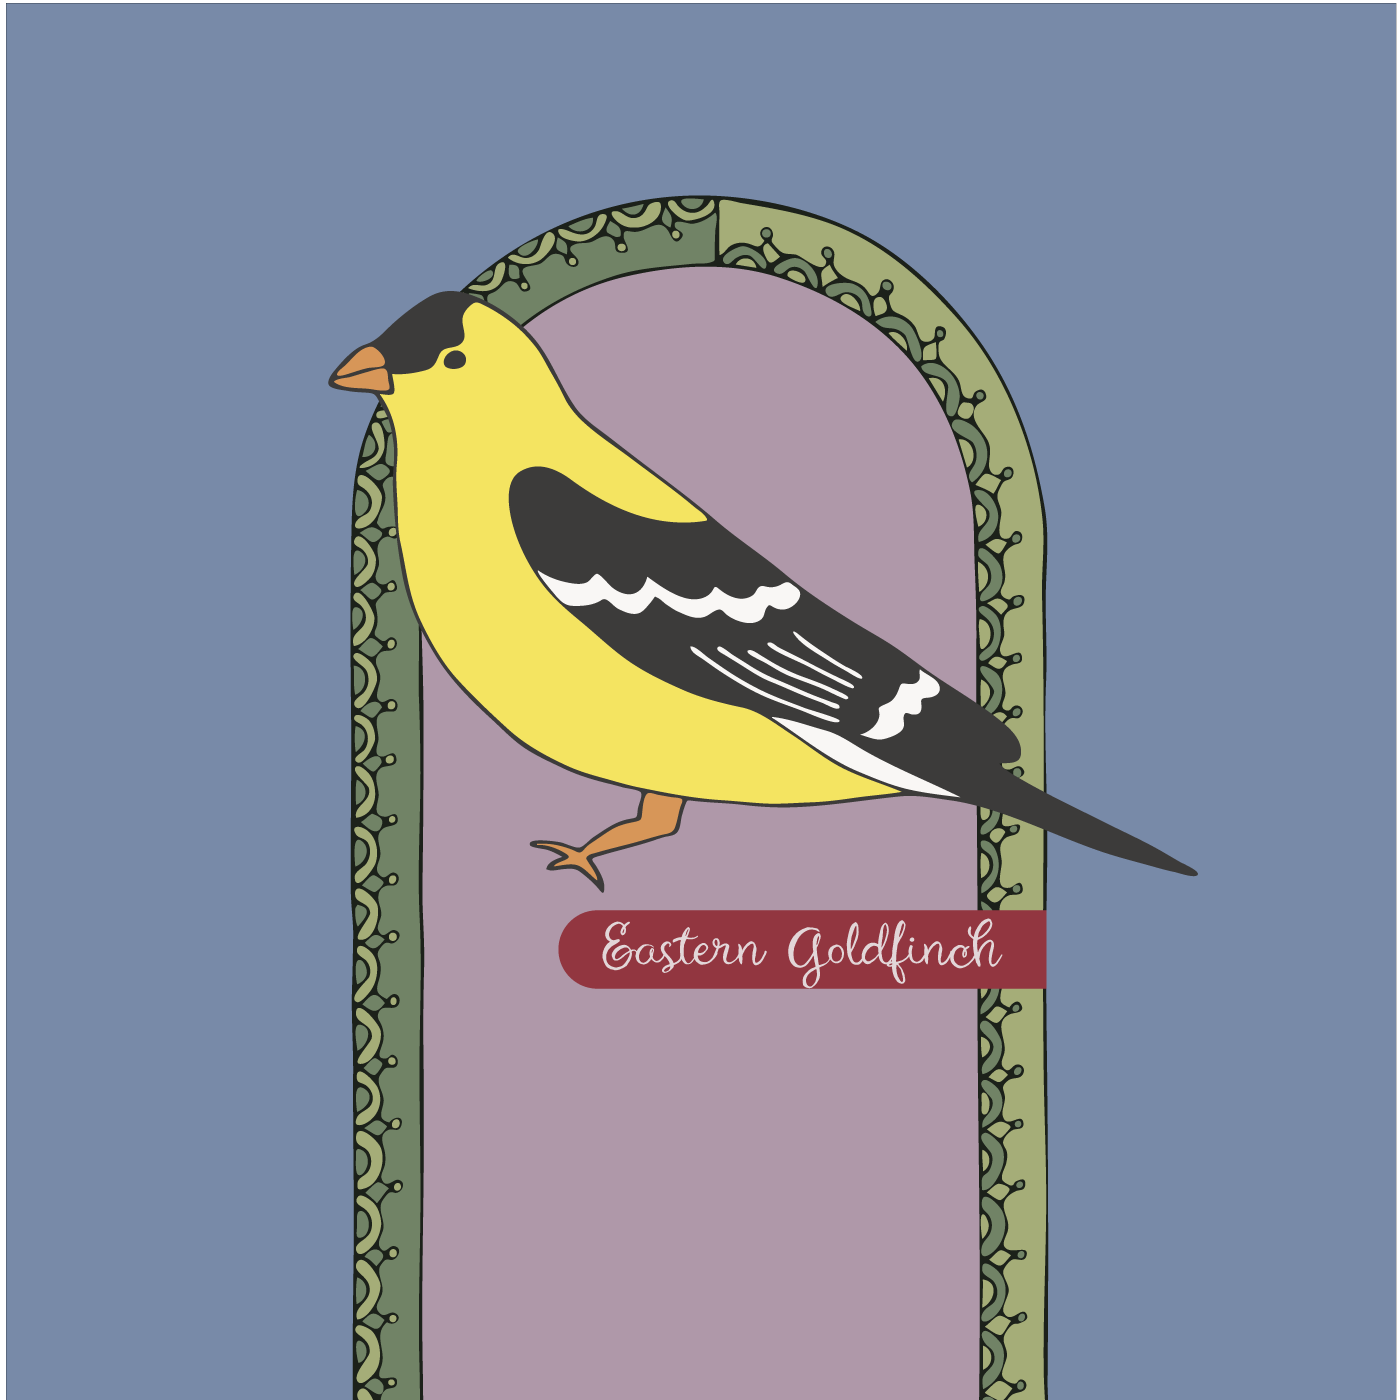 Retro Eastern Goldfinch Illustration